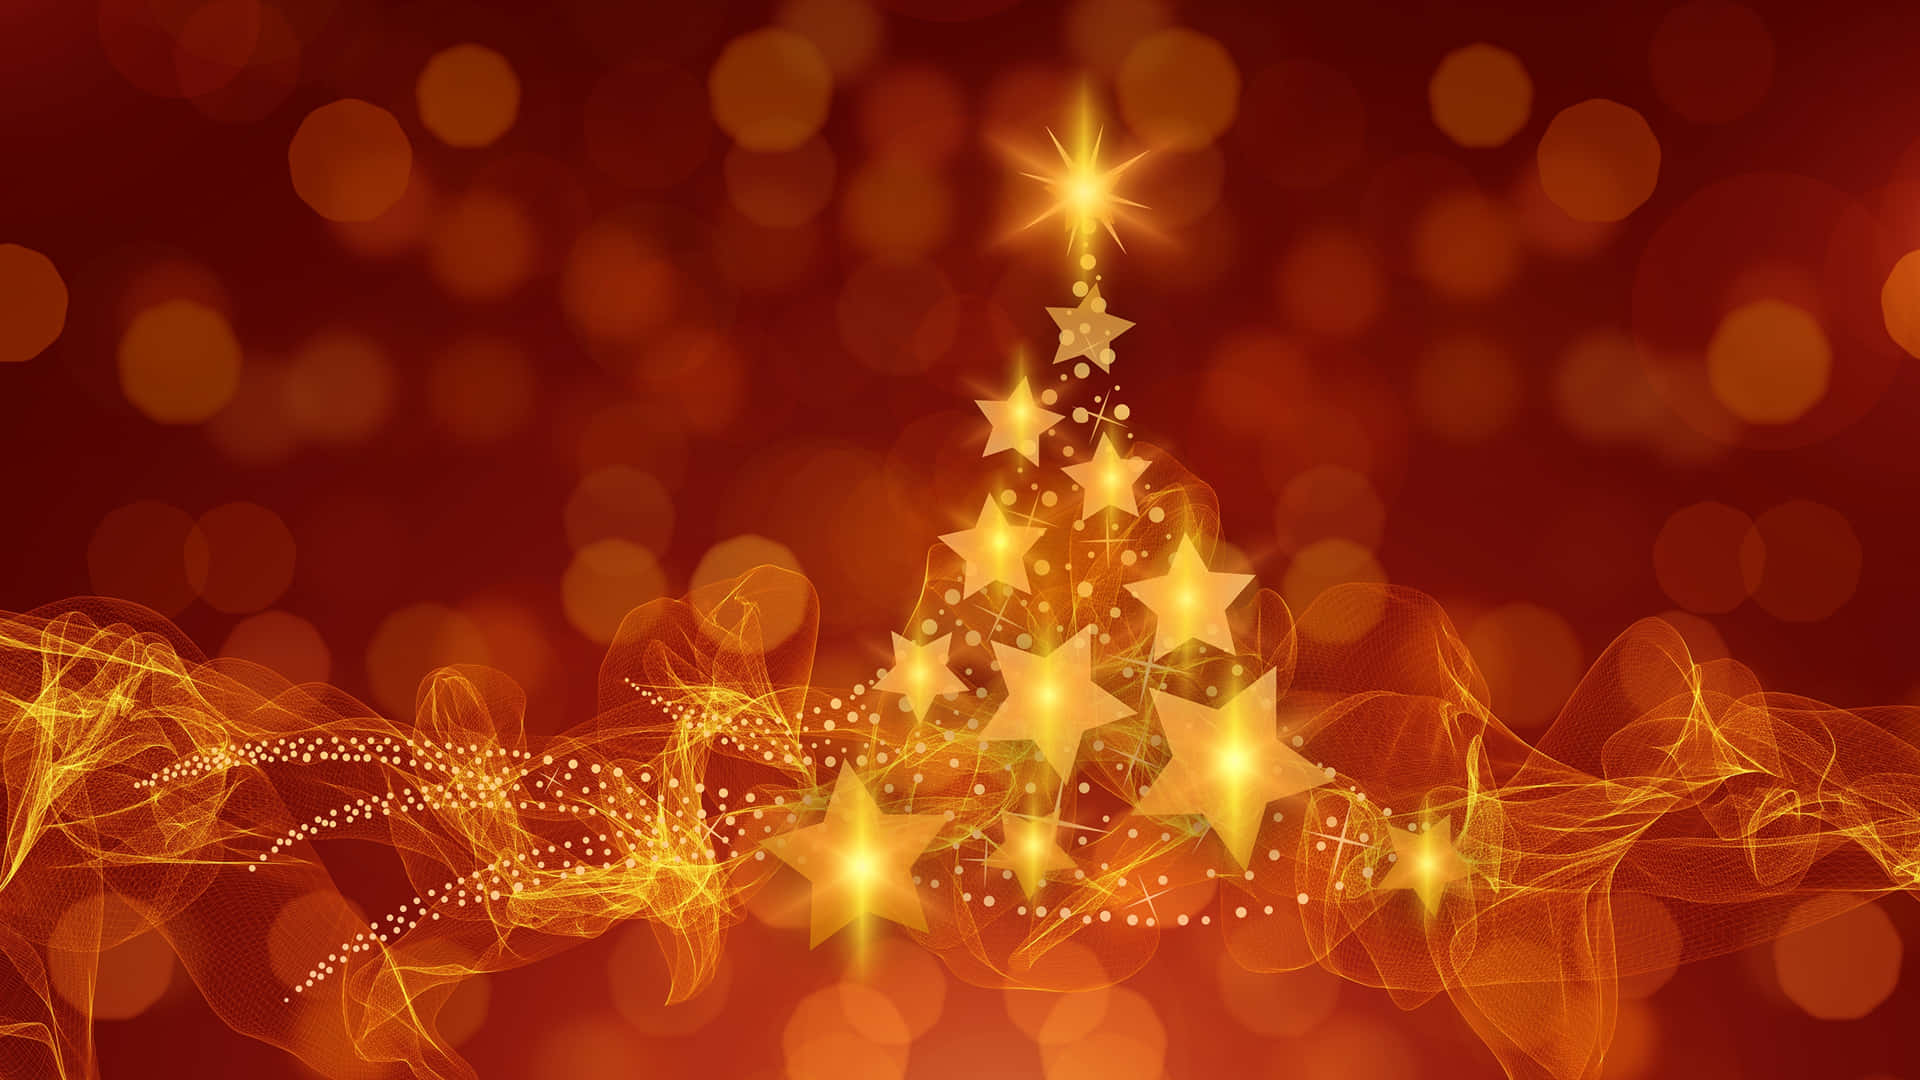 Make a wish on the beautiful Christmas star this season Wallpaper